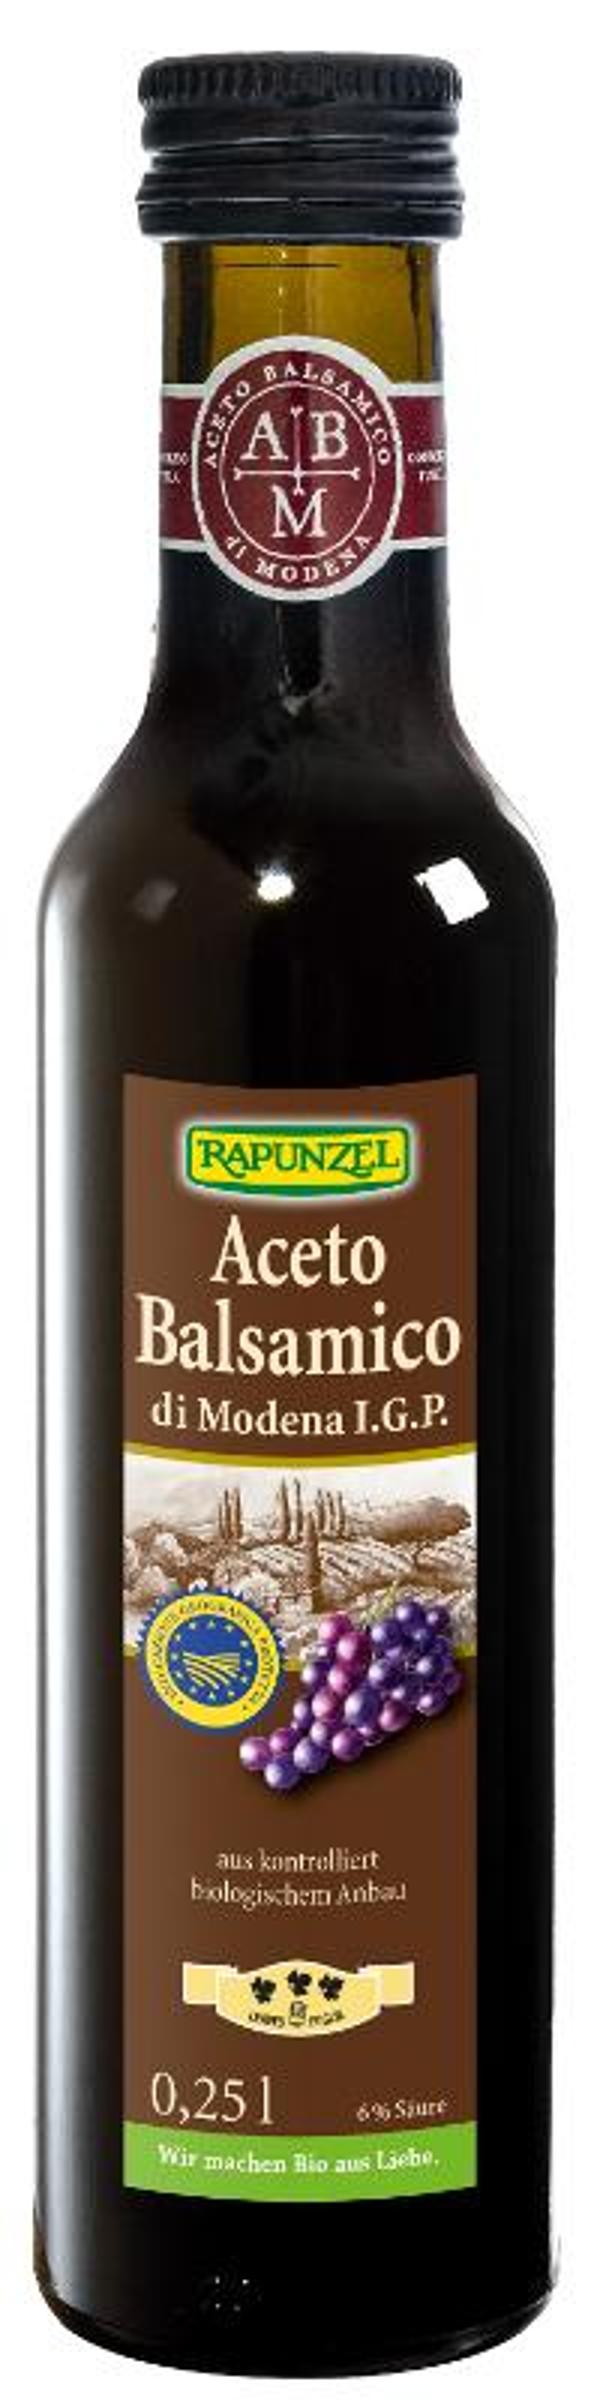 Produktfoto zu Aceto Balsamico di Modena Speciale, 250ml